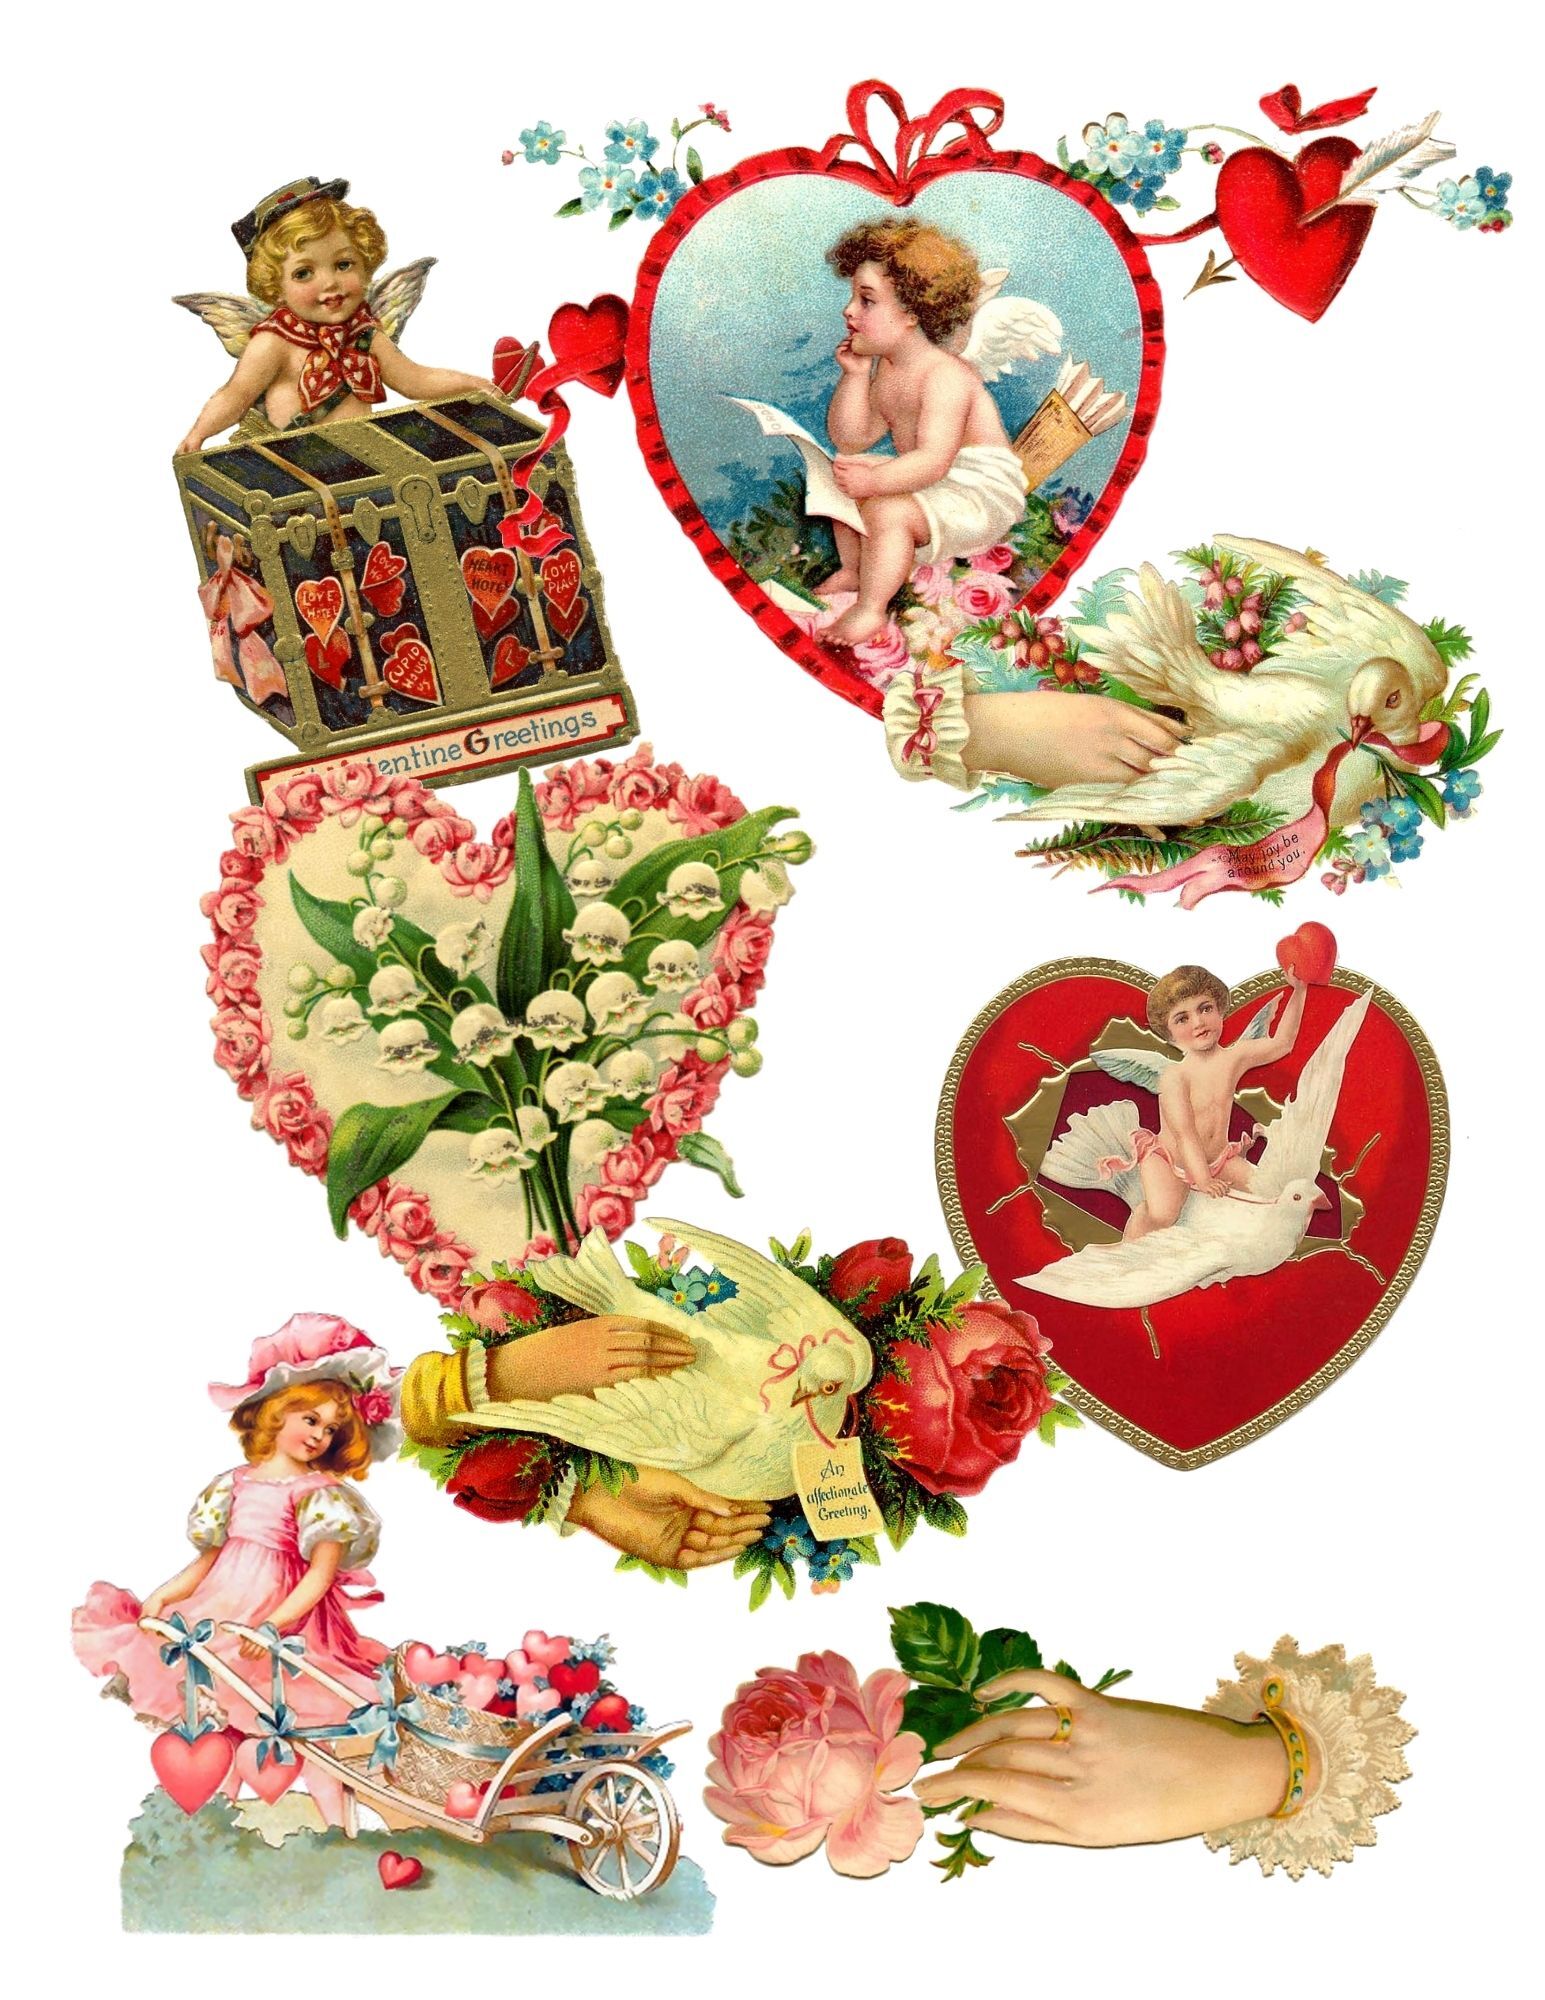 Authentic Vintage Valentines Cards Graphic by Digital Attic Studio